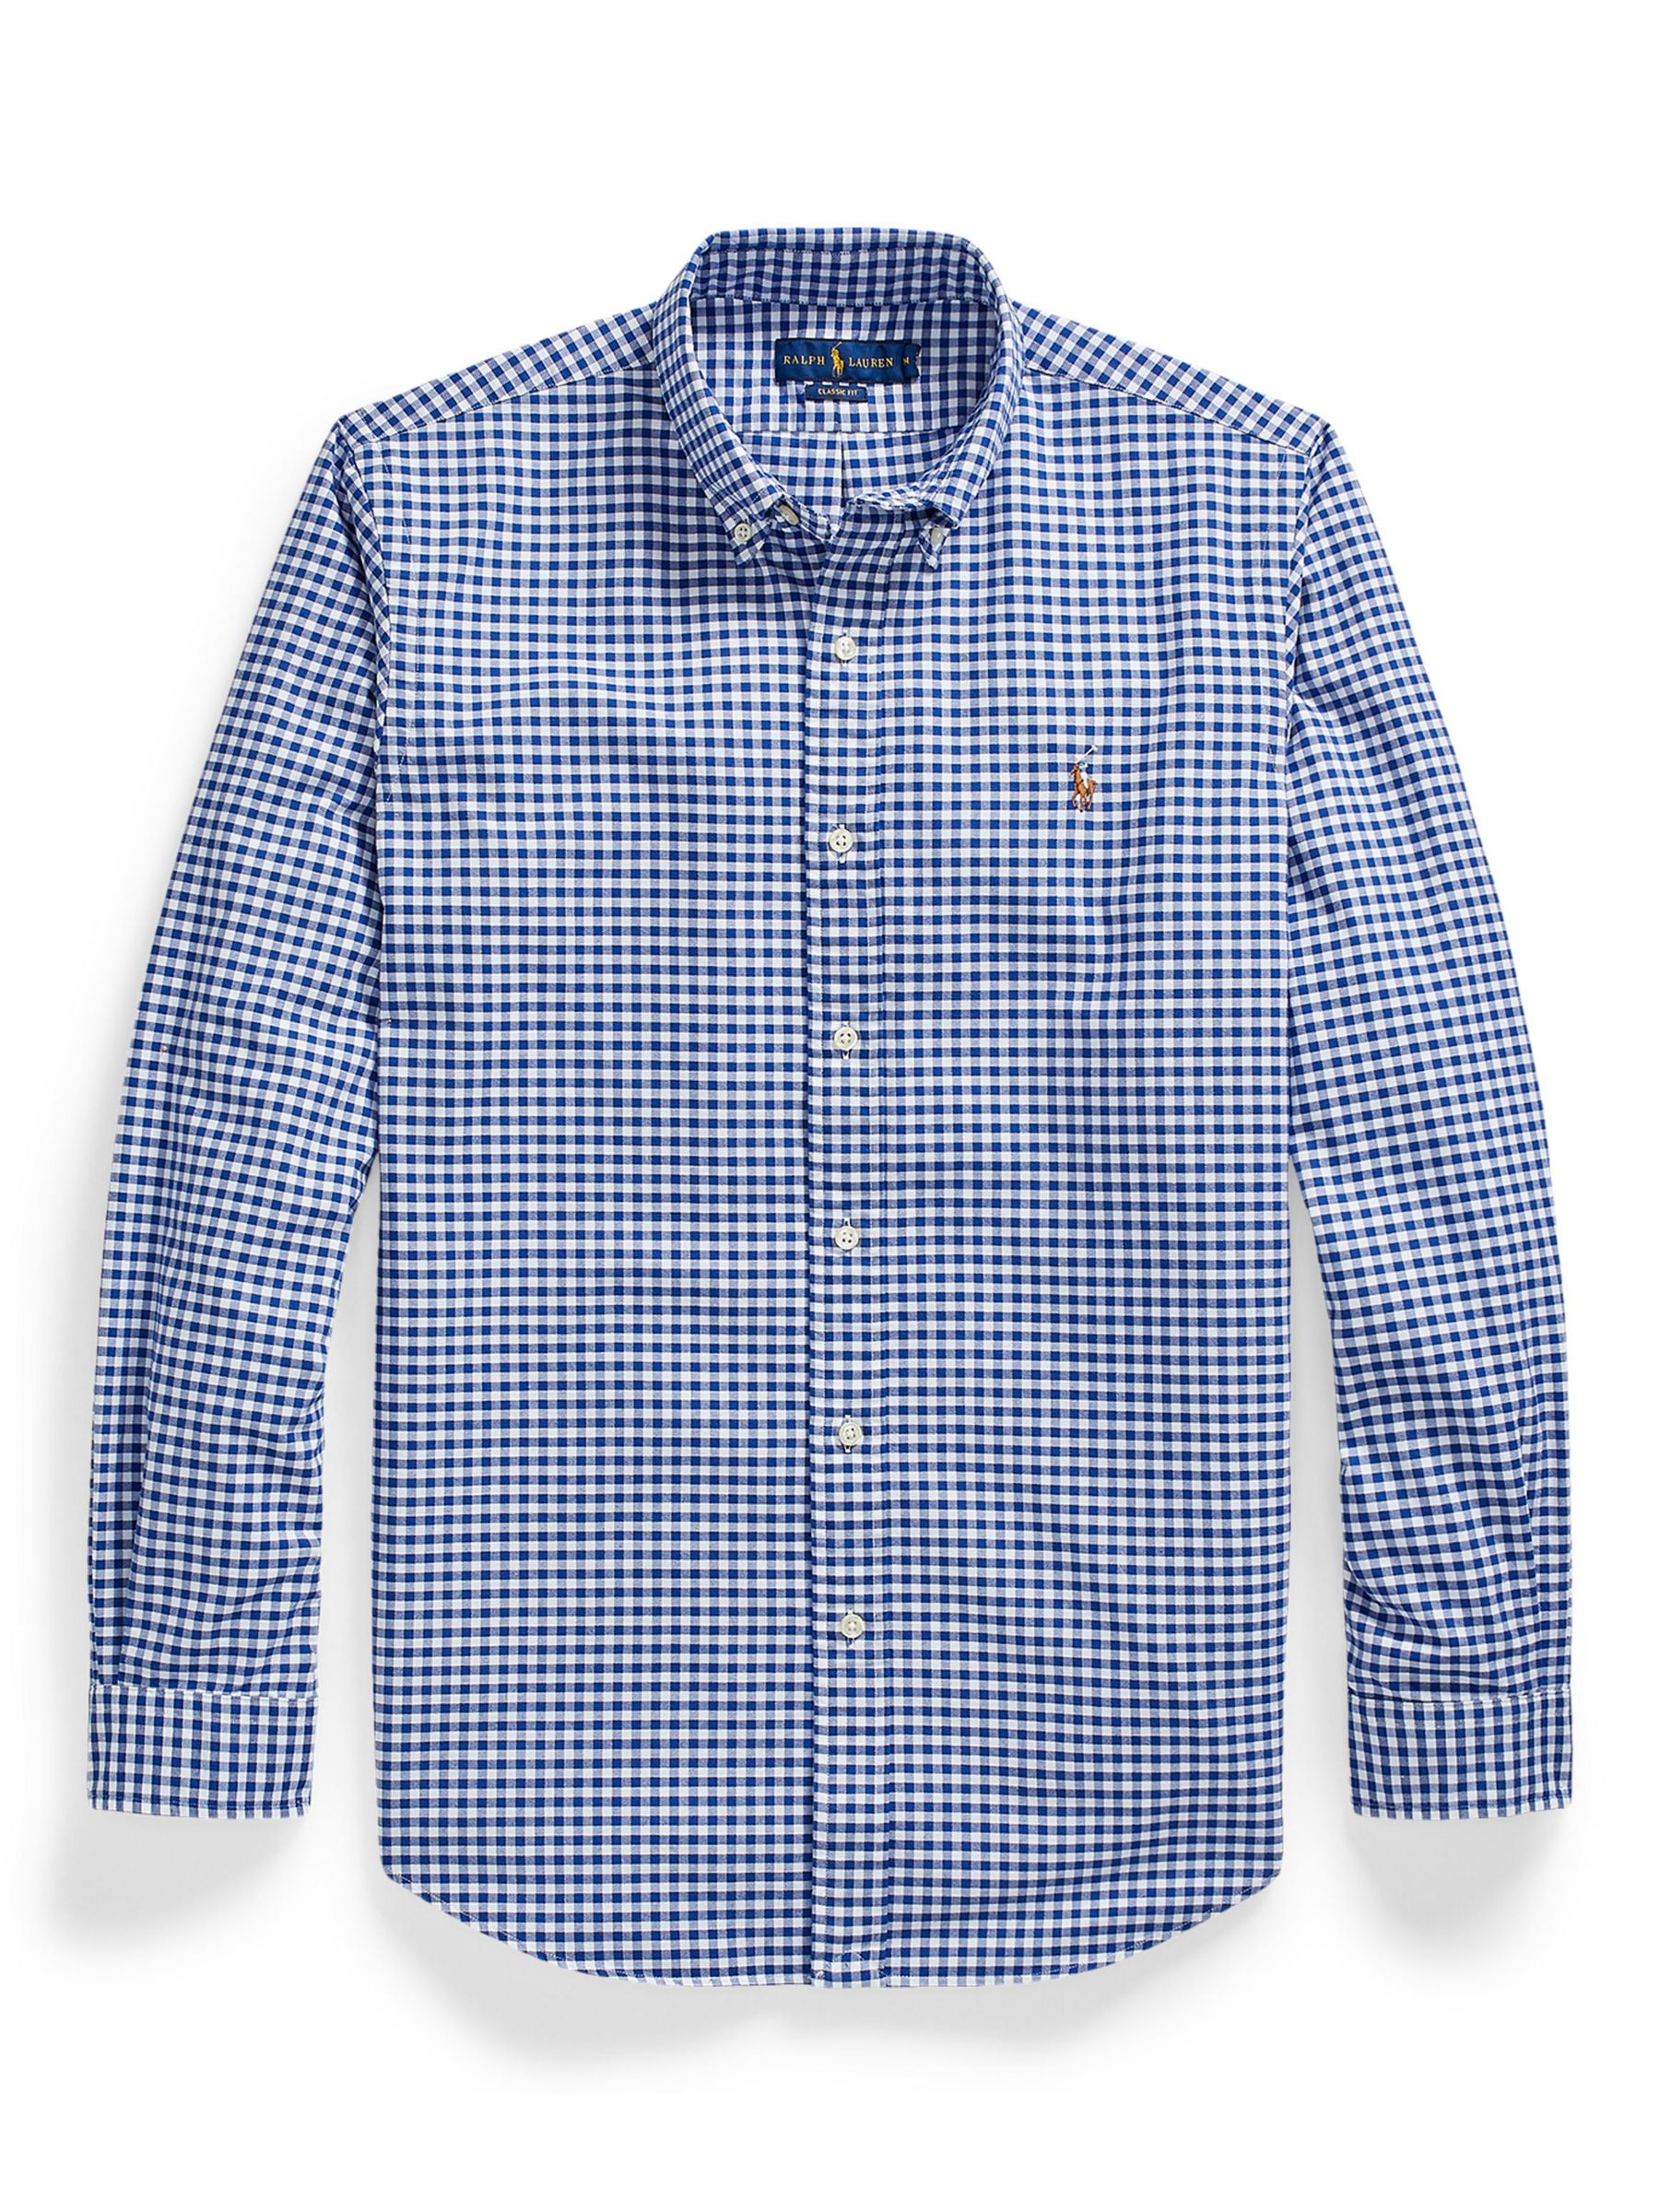 Polo Ralph Lauren Custom Fit Oxford Shirt, Gingham Blue / White, S